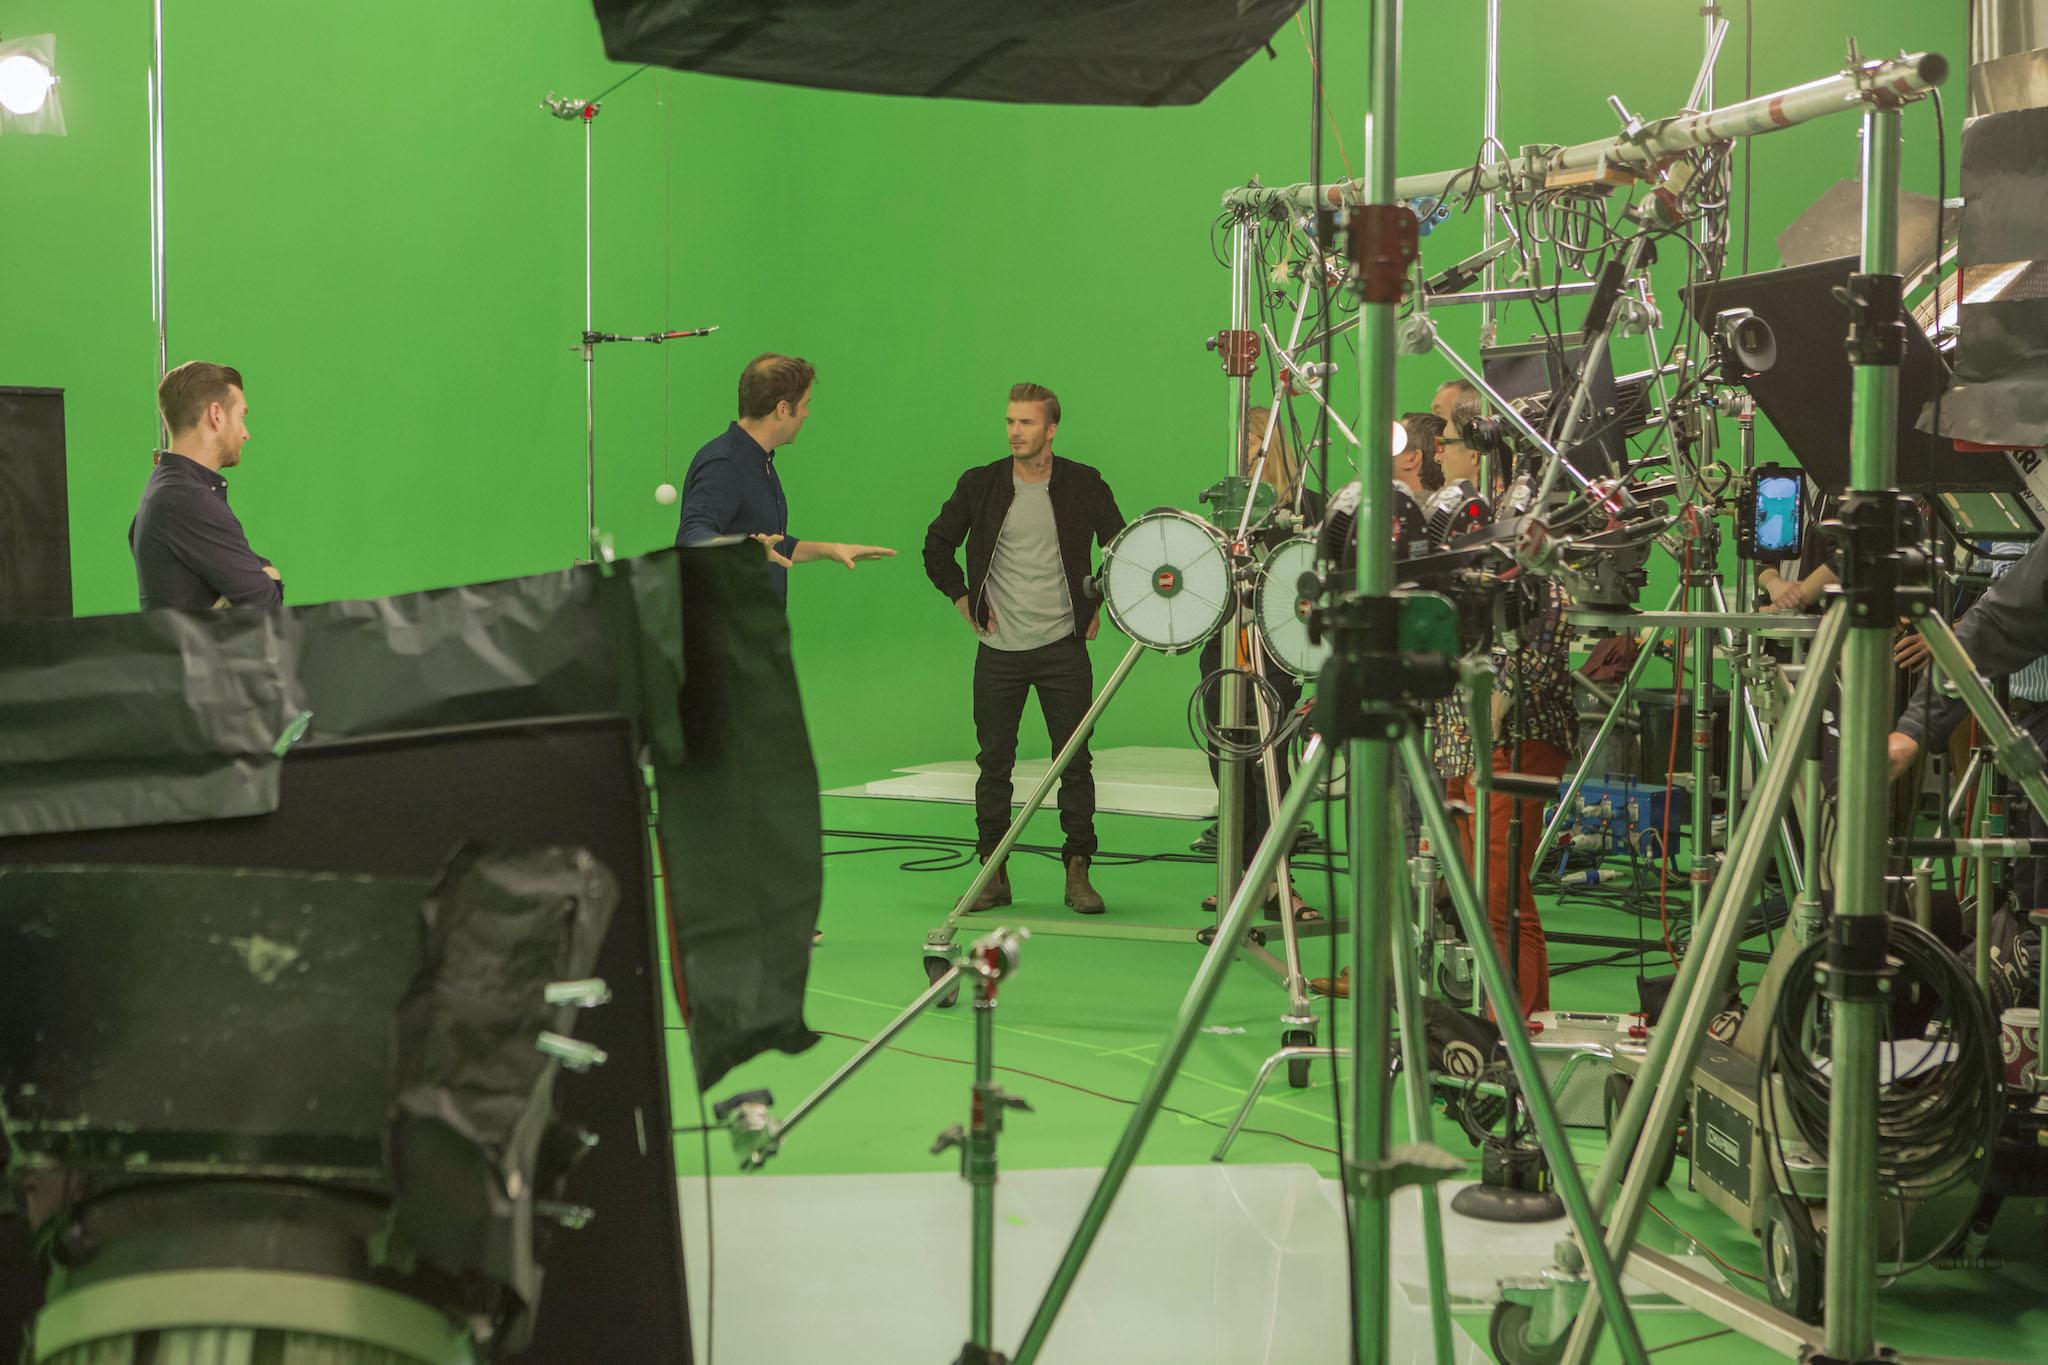 David Beckham filming in virtual reality